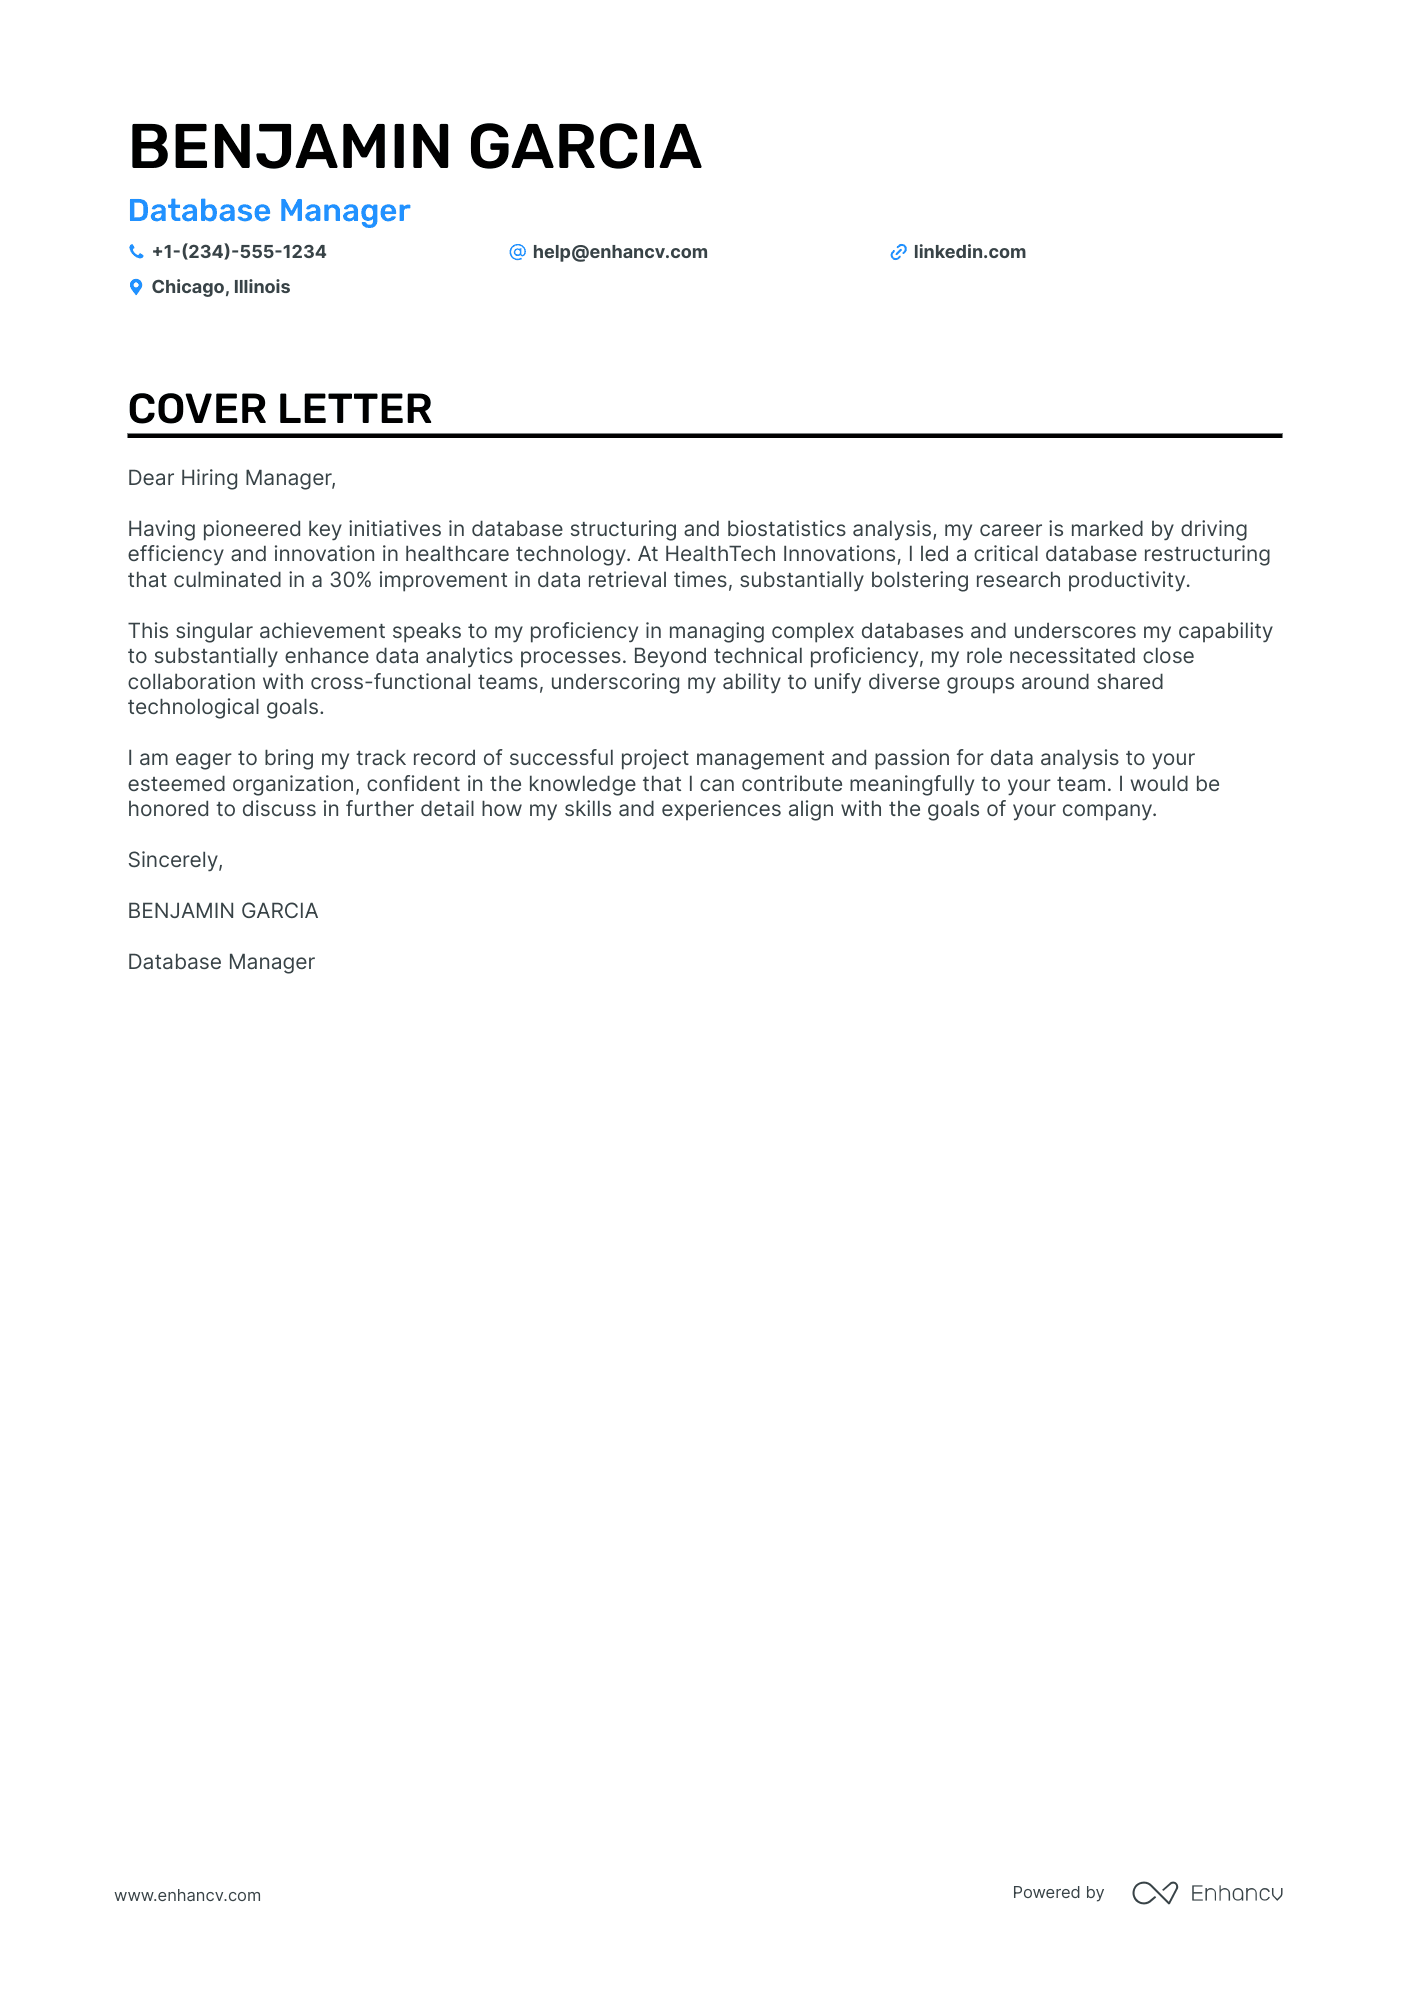 Database Manager cover letter